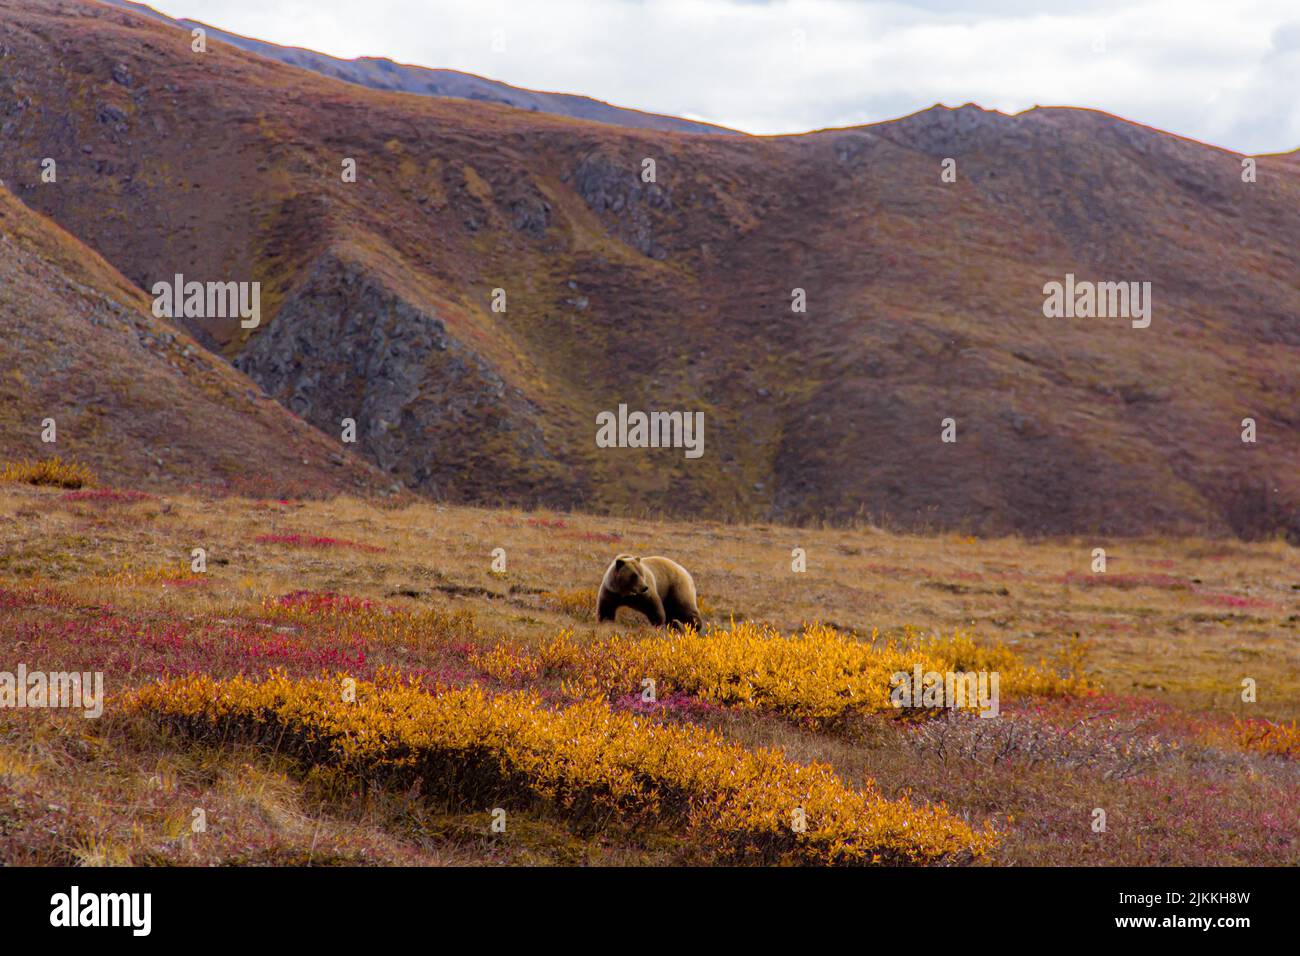 A brown bear in the Denali national park, Alaska, USA Stock Photo